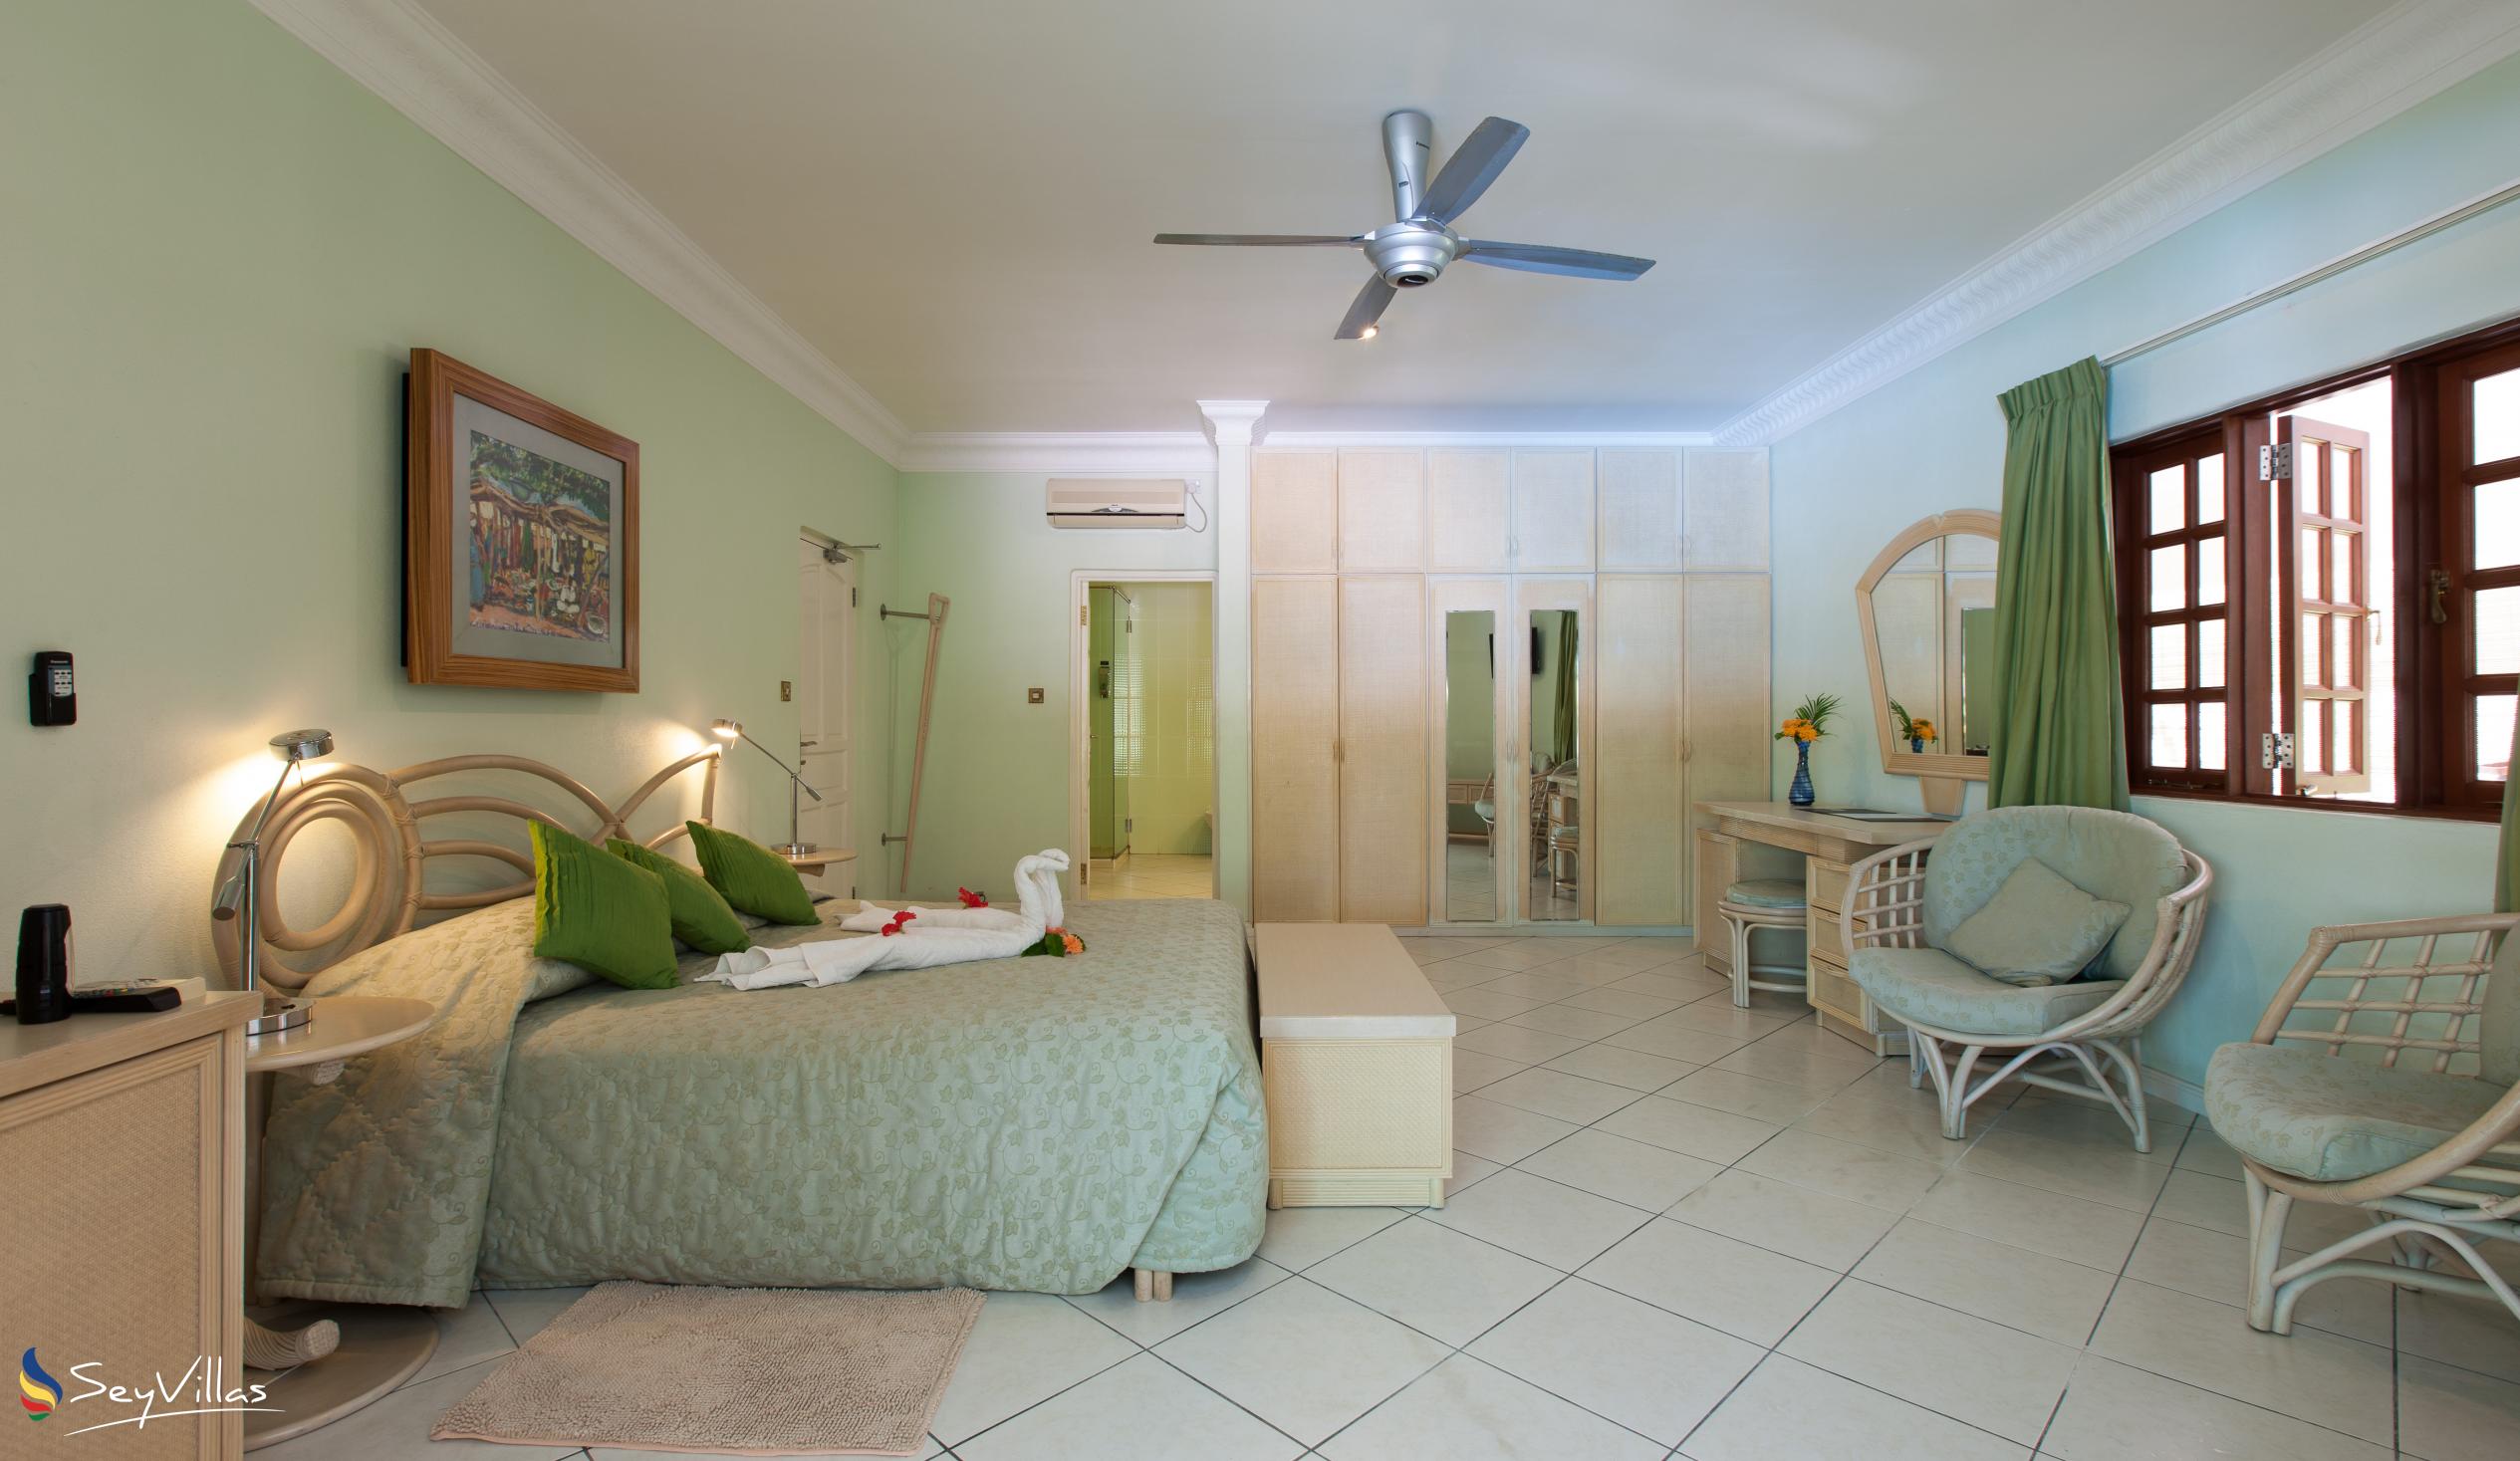 Photo 64: Villa de Cerf - Double Room - Cerf Island (Seychelles)